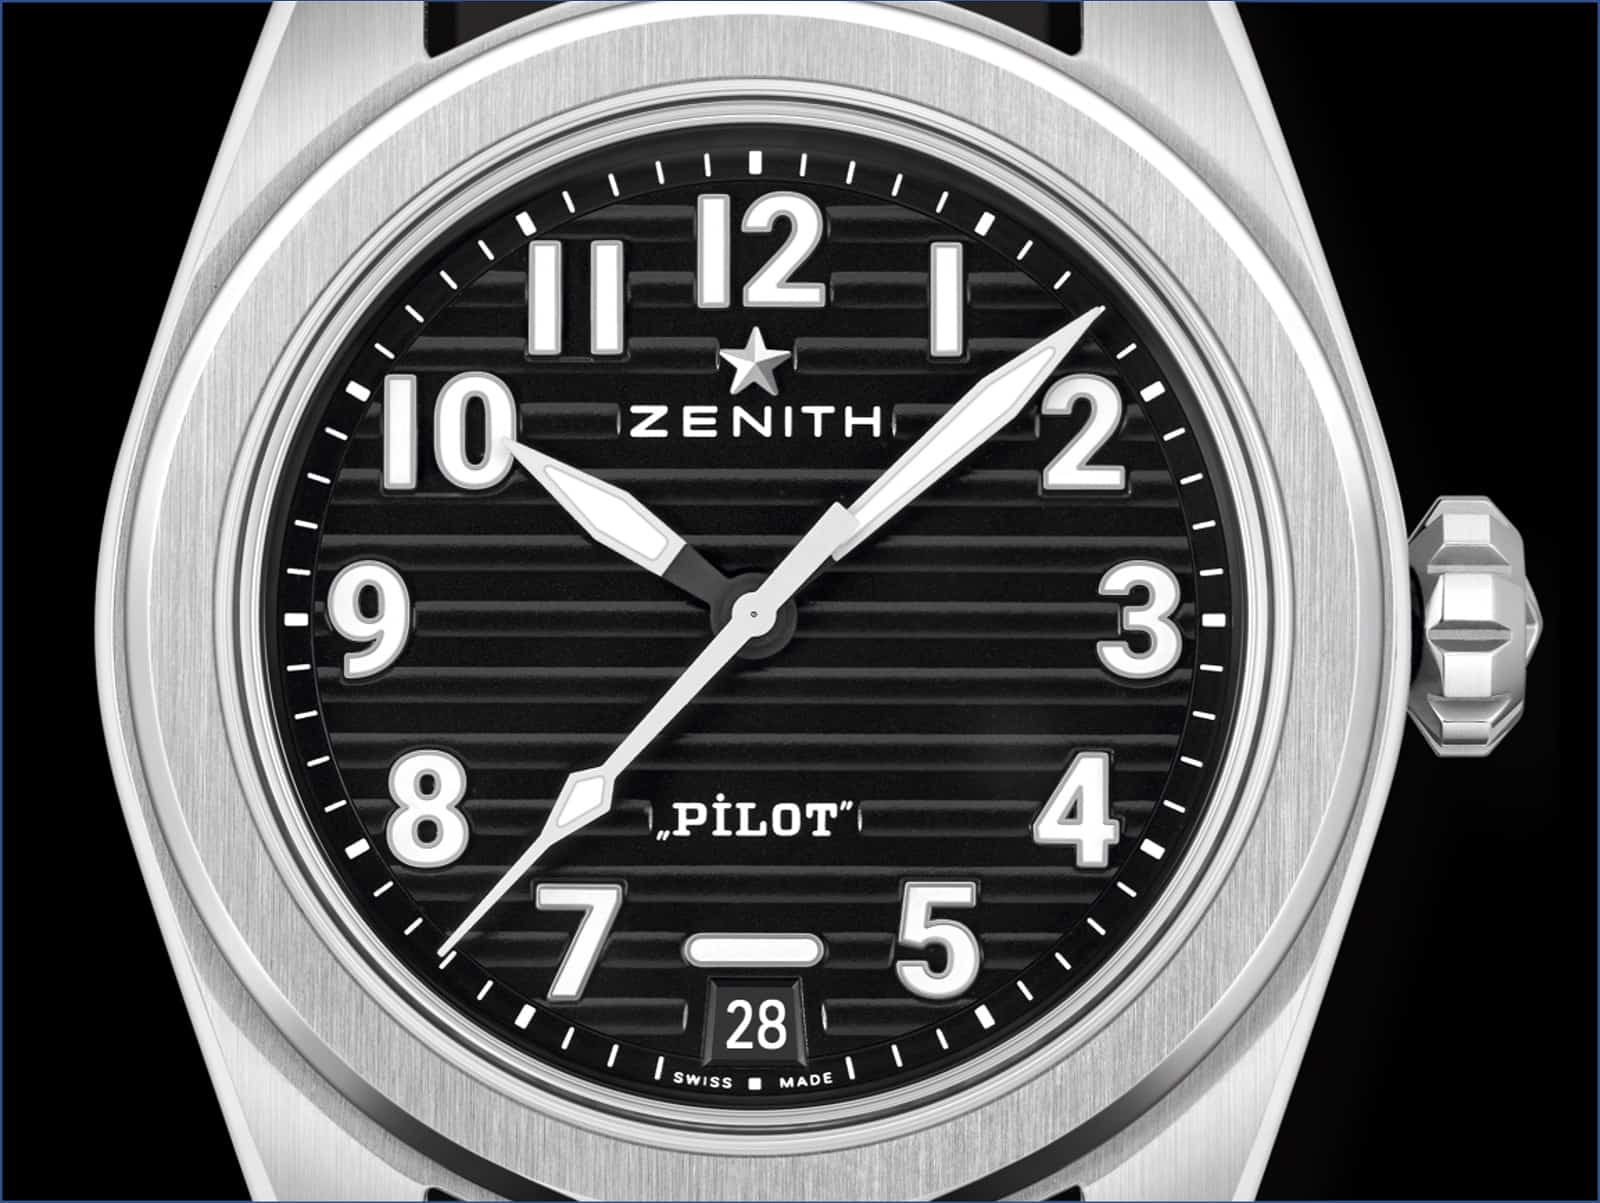 Ziffeblattdetail der neuen Zenith Pilot Automatic